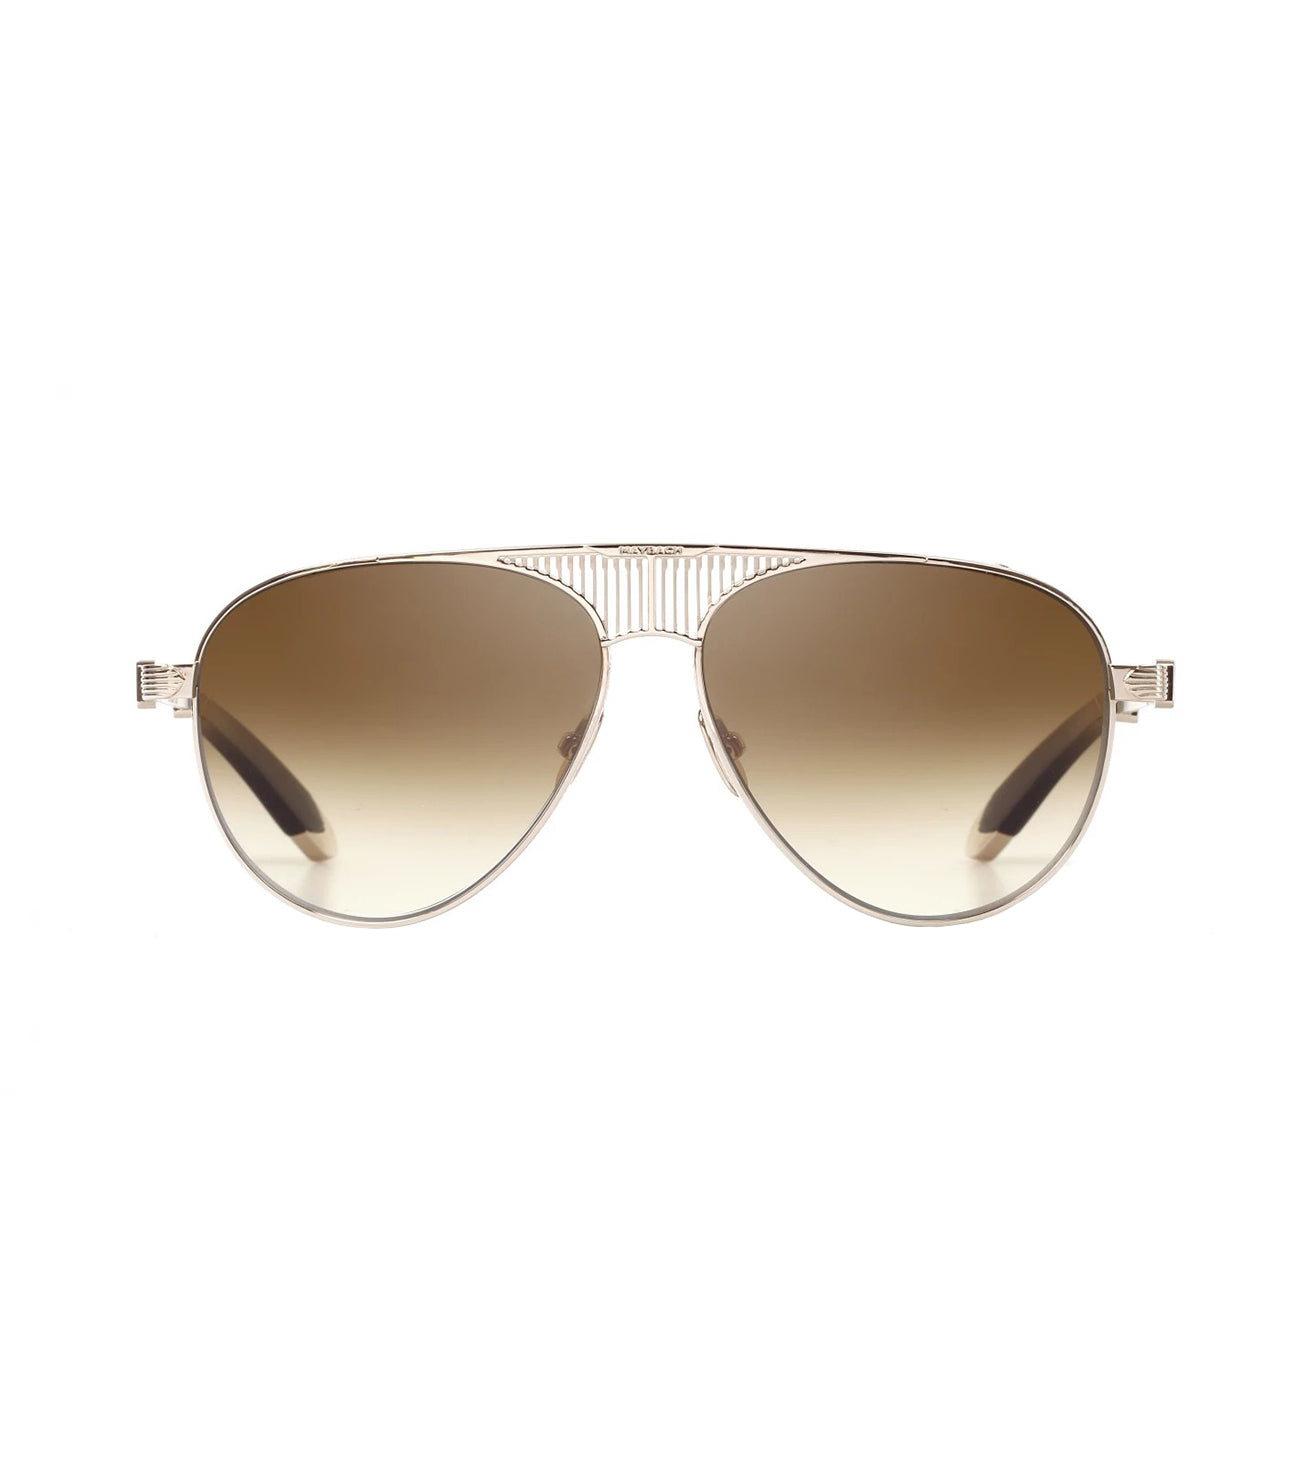 Maybach Unisex Brown Aviator Sunglasses